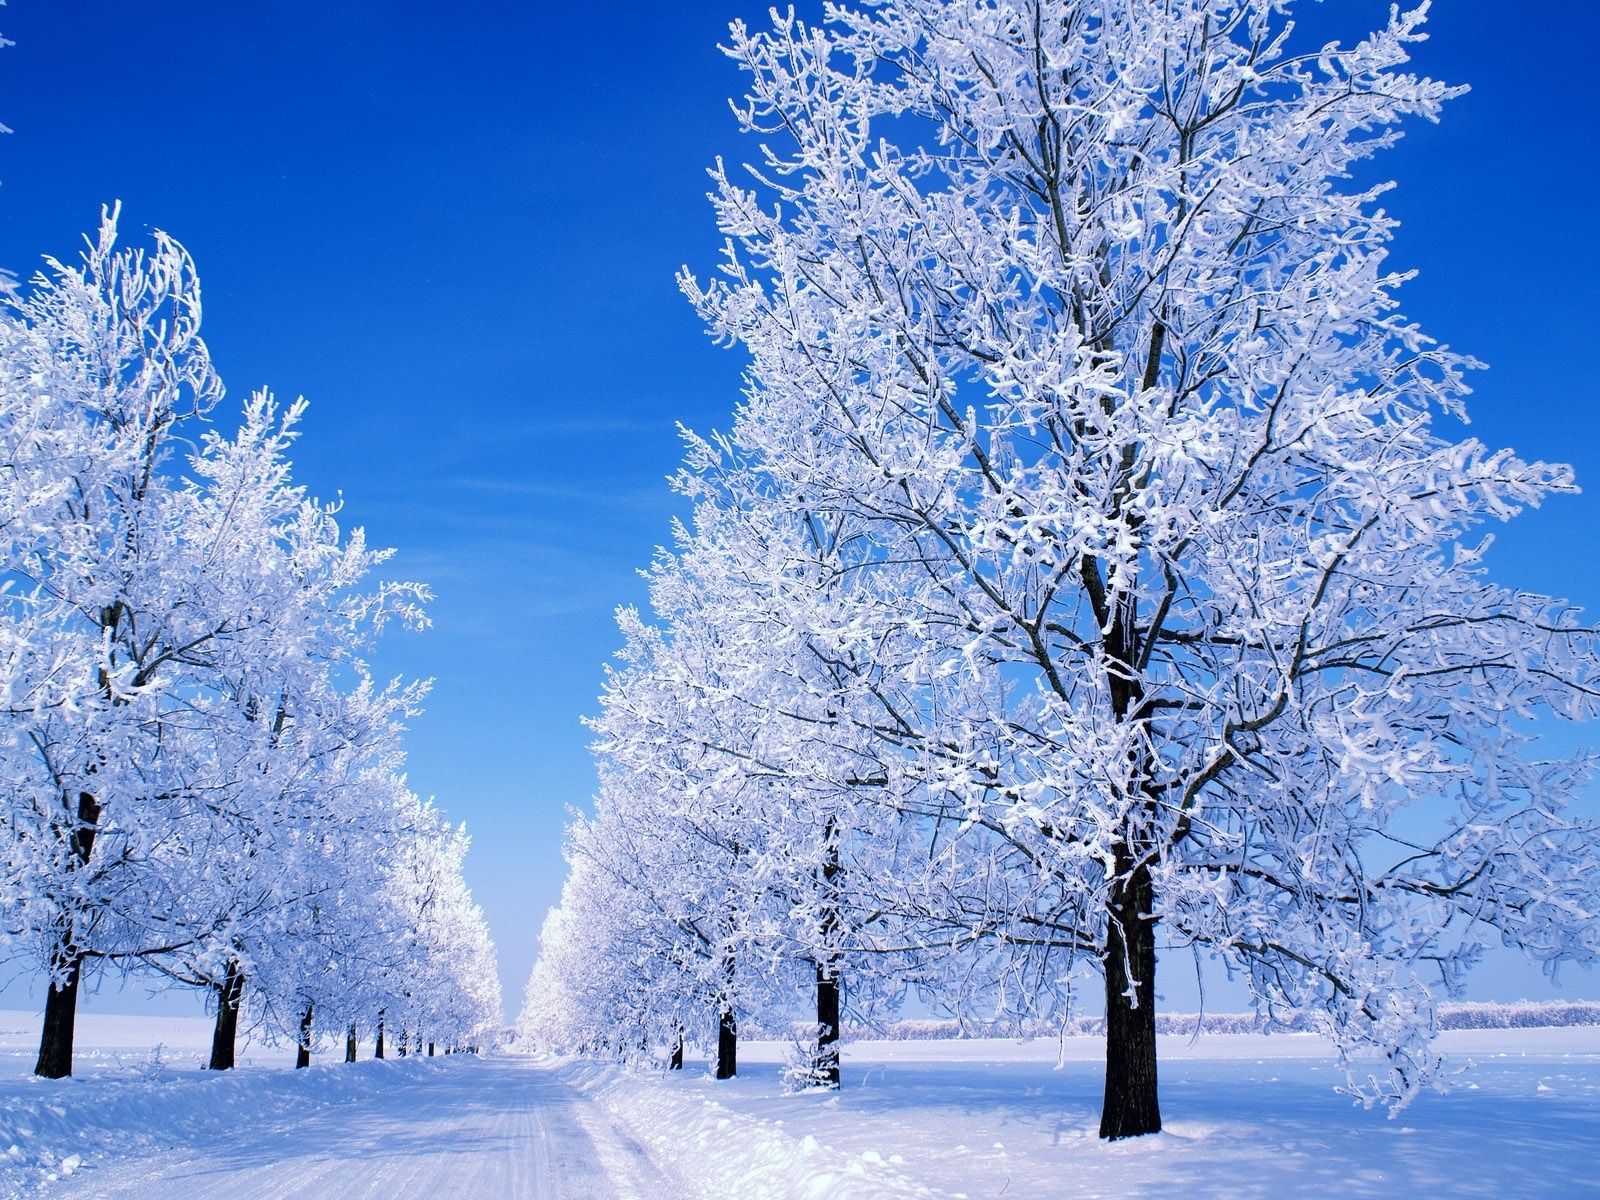 Frosty. Winter snow wallpaper, Winter picture, Winter scenery